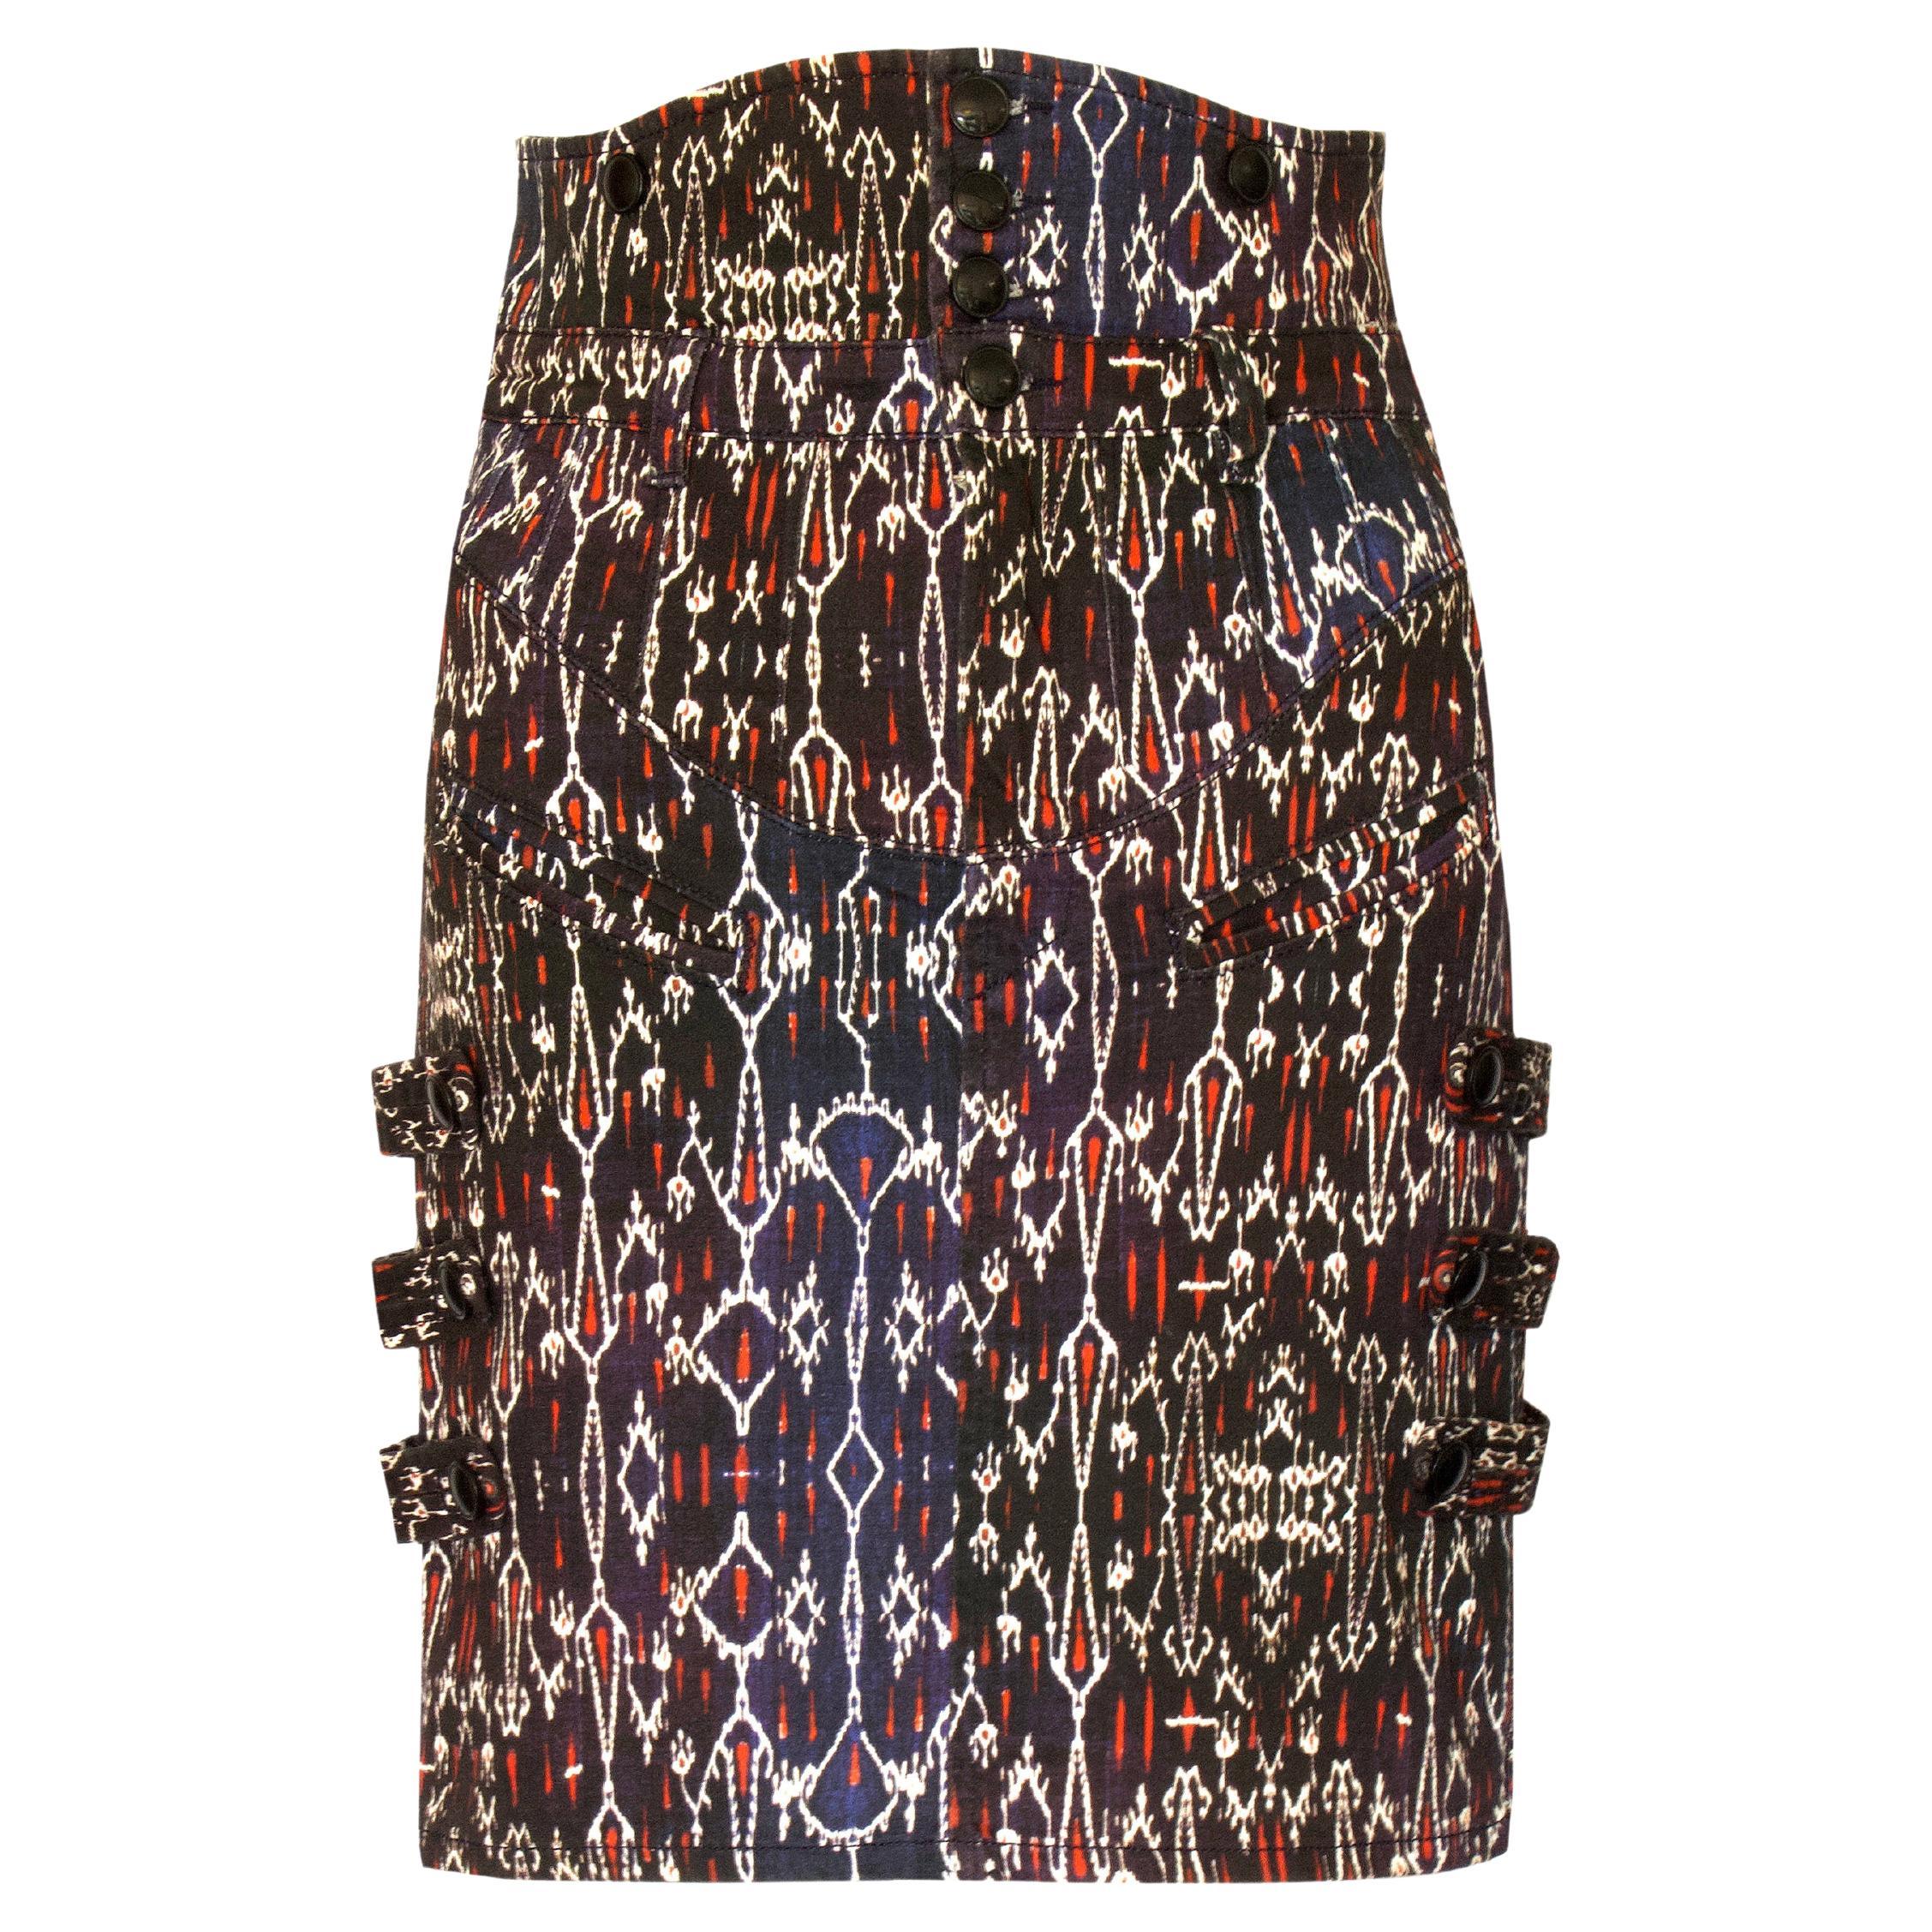 Isabel Marant Skirt - High-Waisted - Stretch Cotton - Side Strap Detailing 